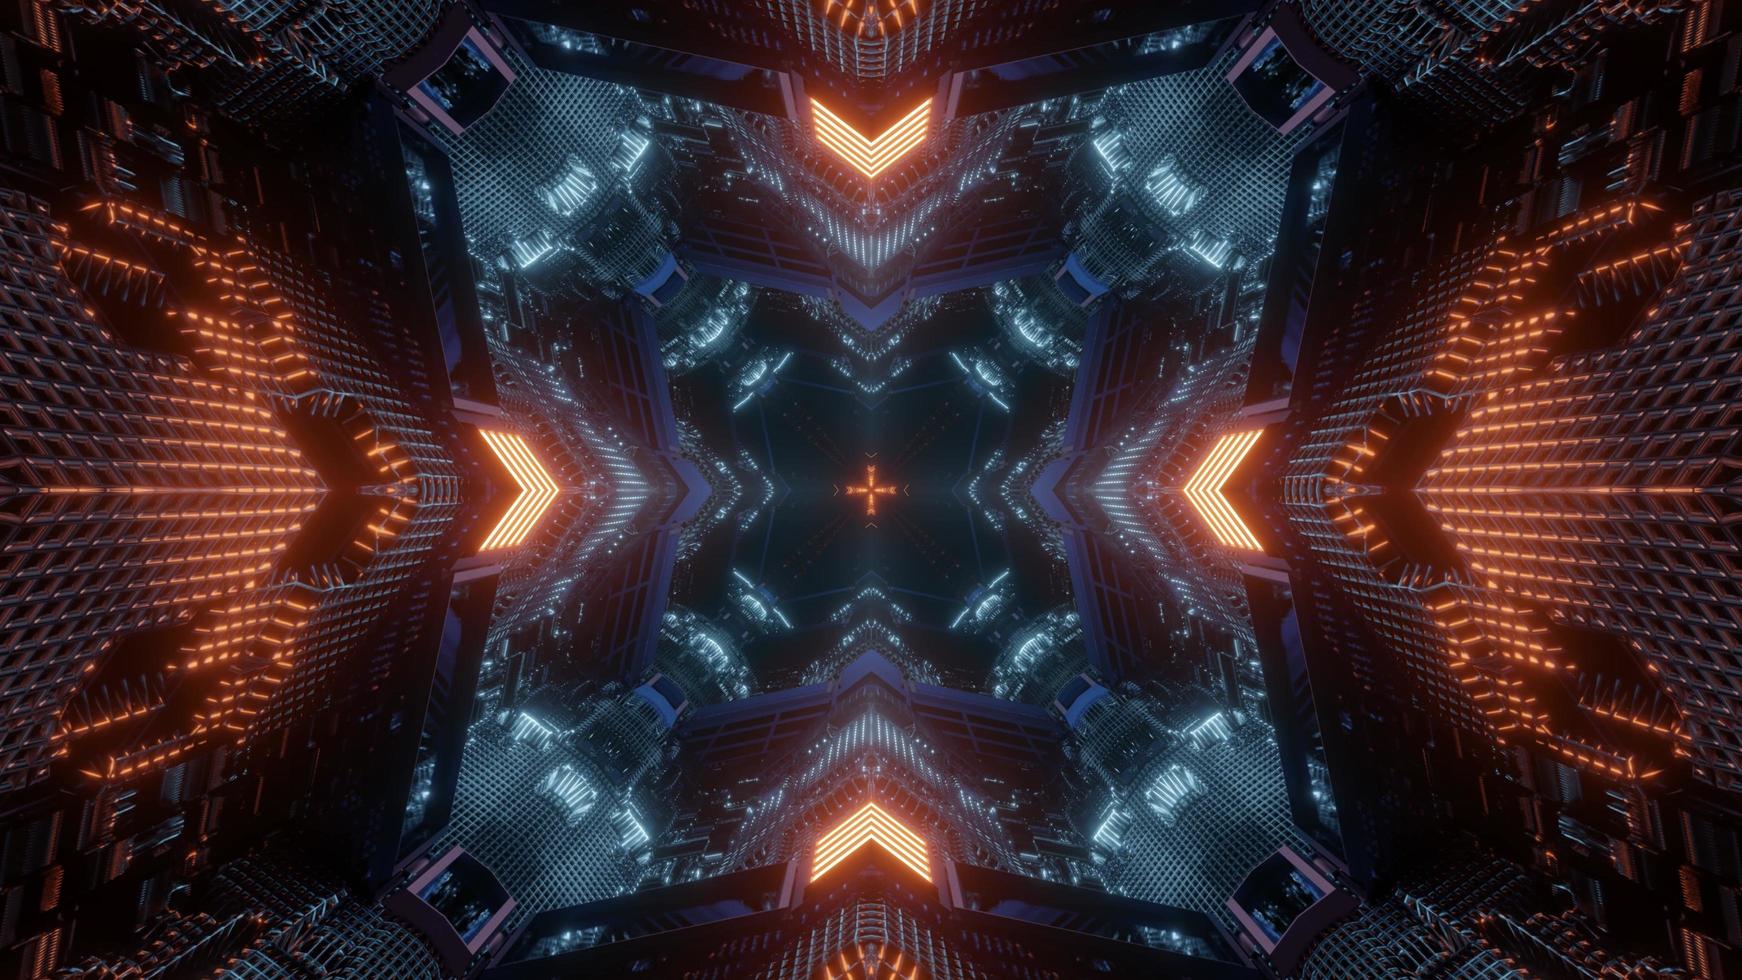 Blue and orange 3D kaleidoscope design illustration for background or texture photo